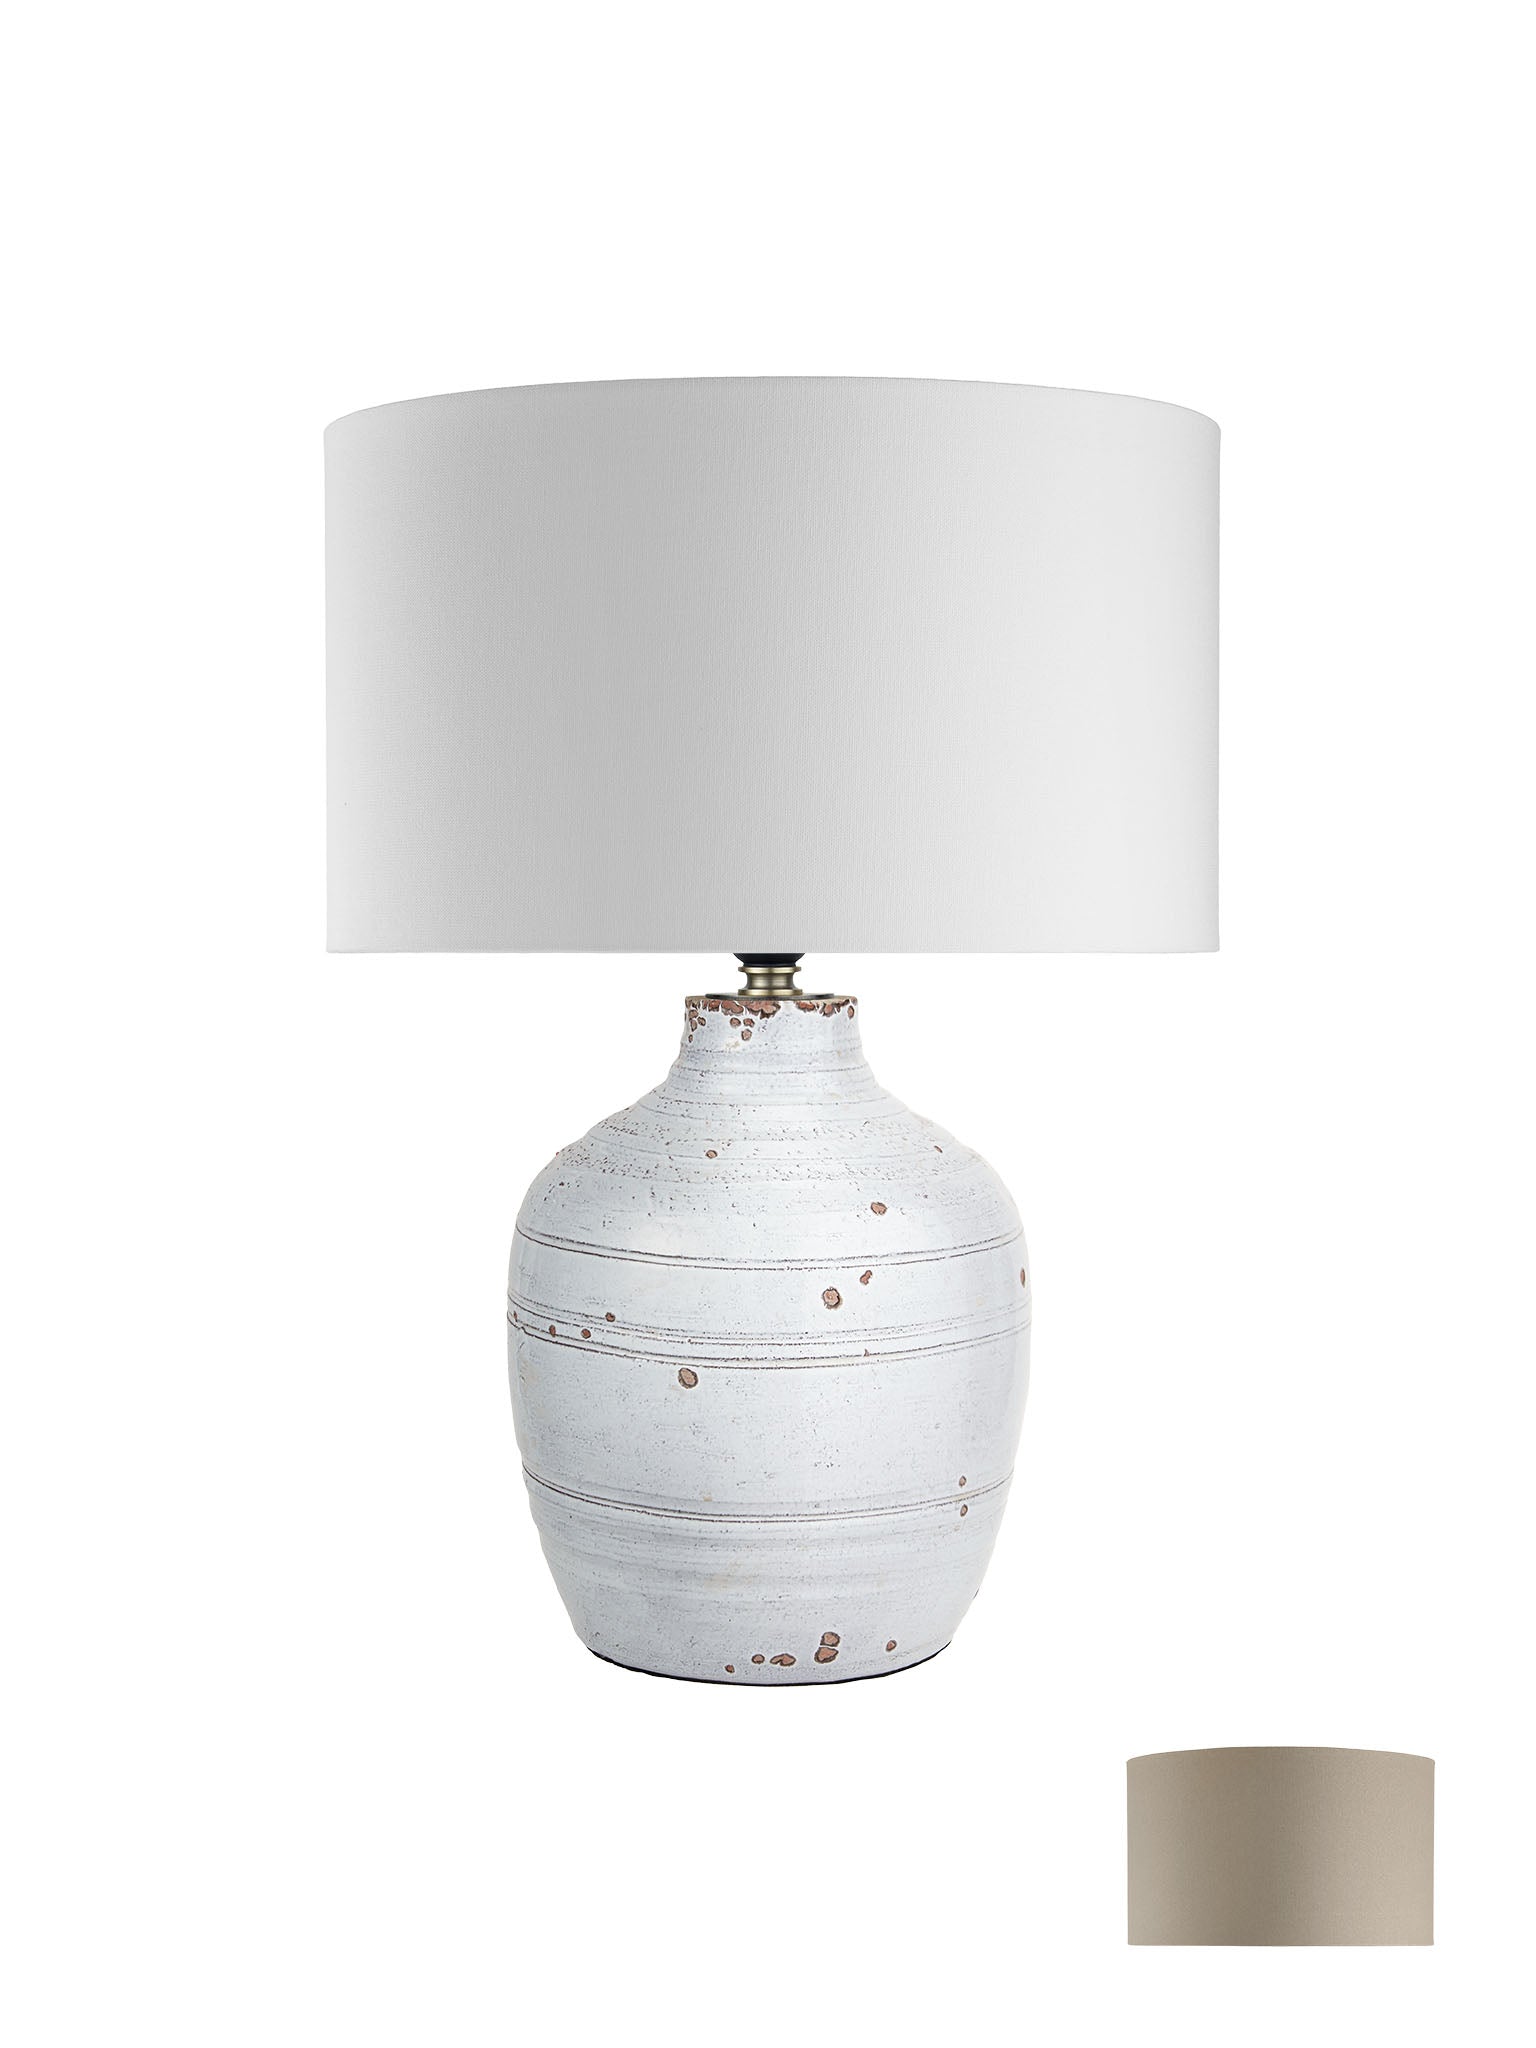 ceramic lamp base with white shades